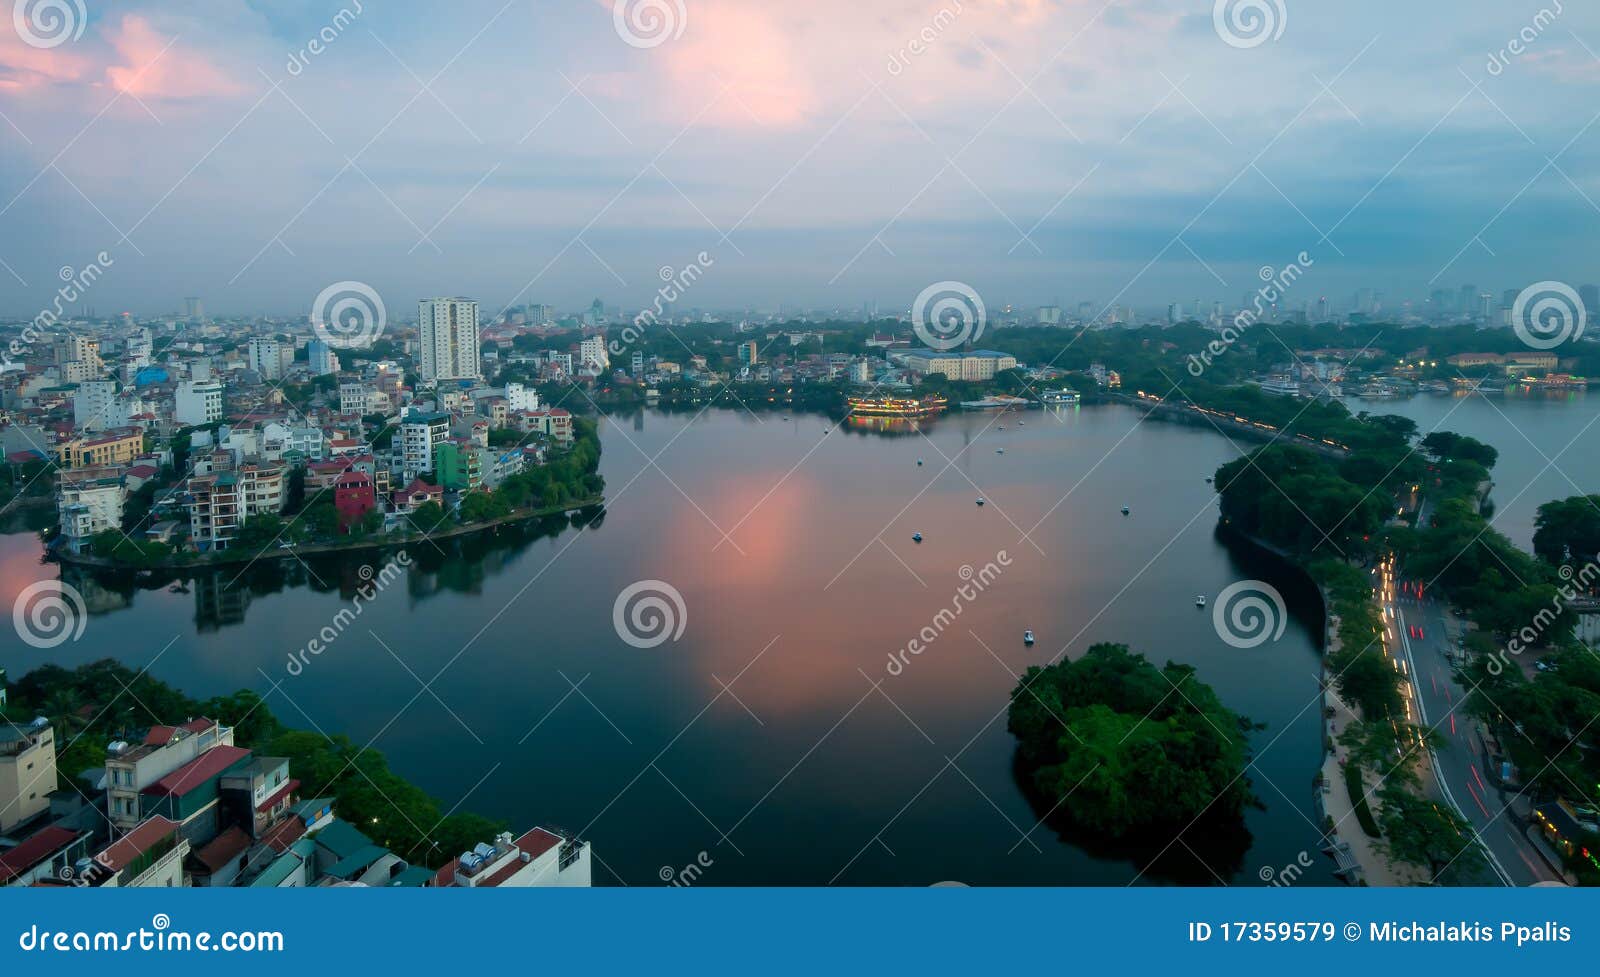 skyline of hanoi  and joan kiem lake vietnam asia on sunset